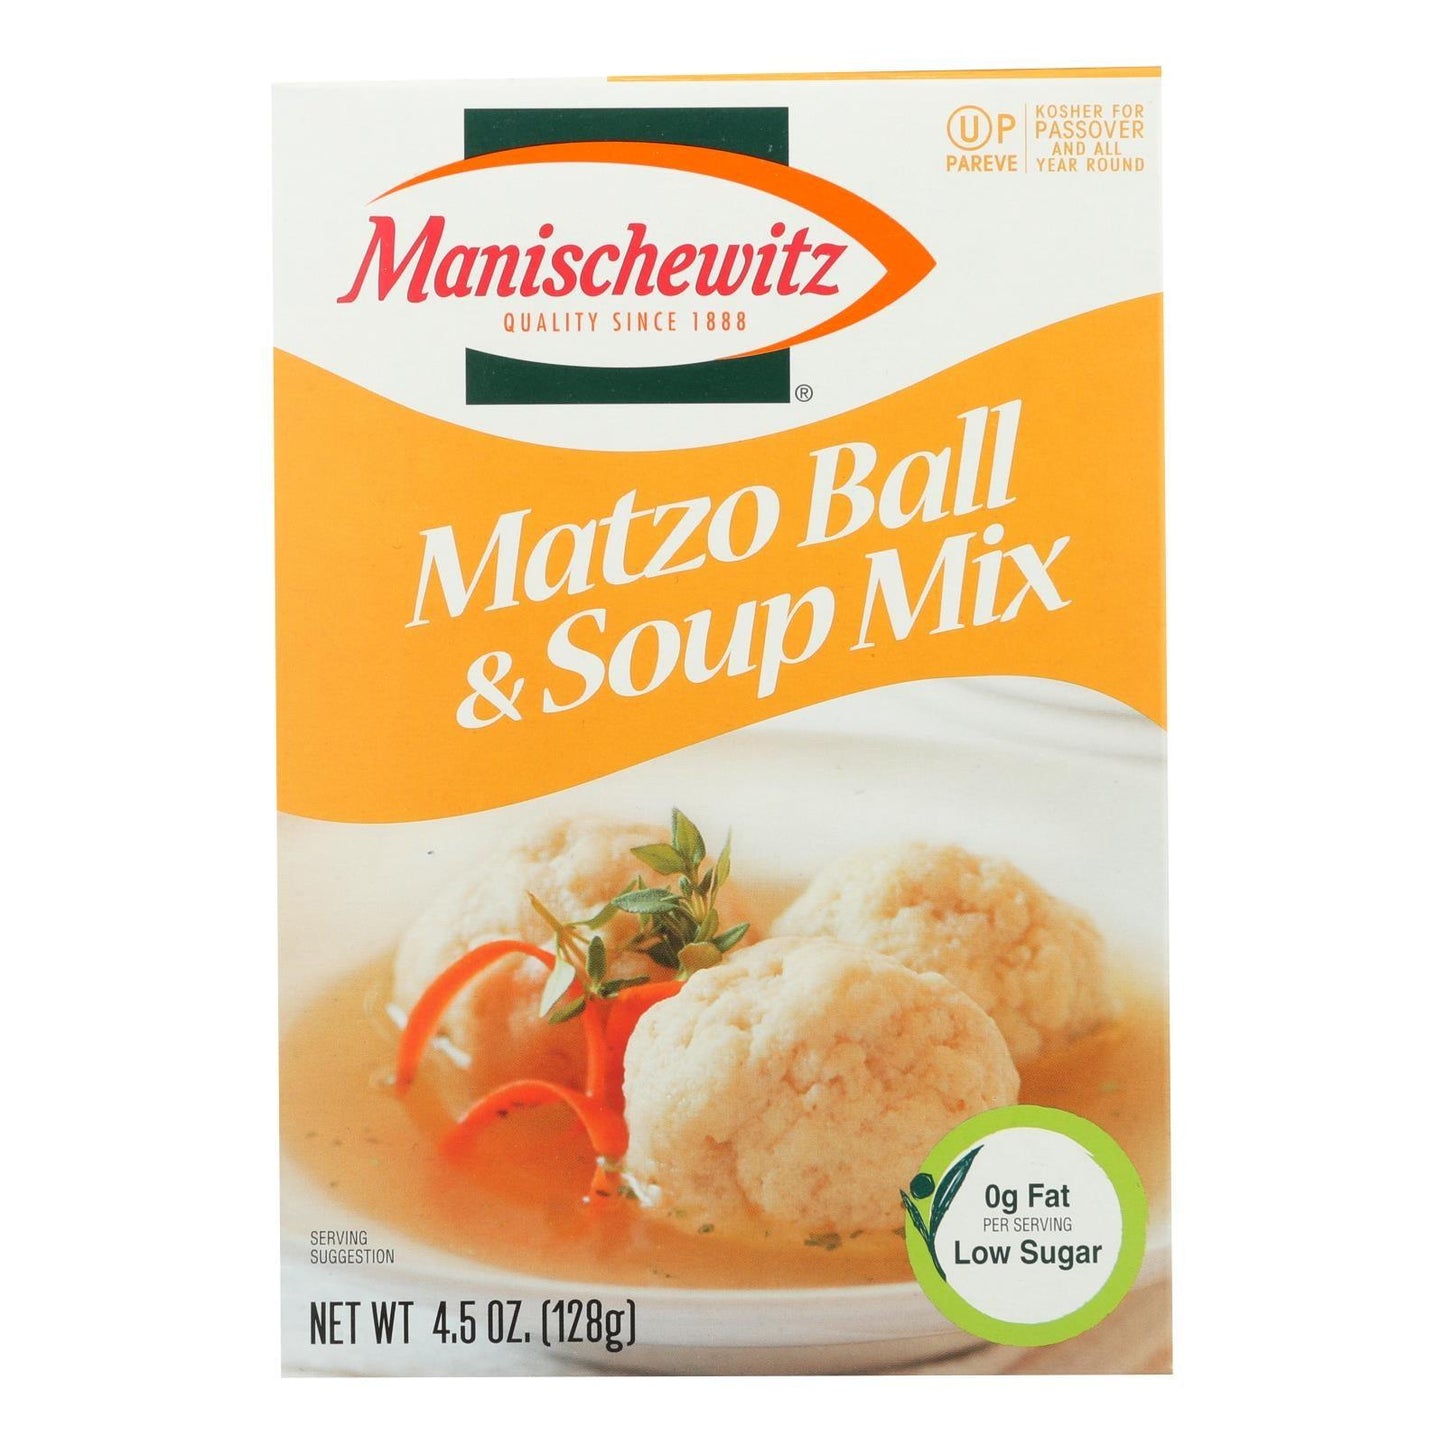 Manischewitz - Matzo Ball And Soup Mix - Case Of 24 - 4.5 Oz. - Loomini